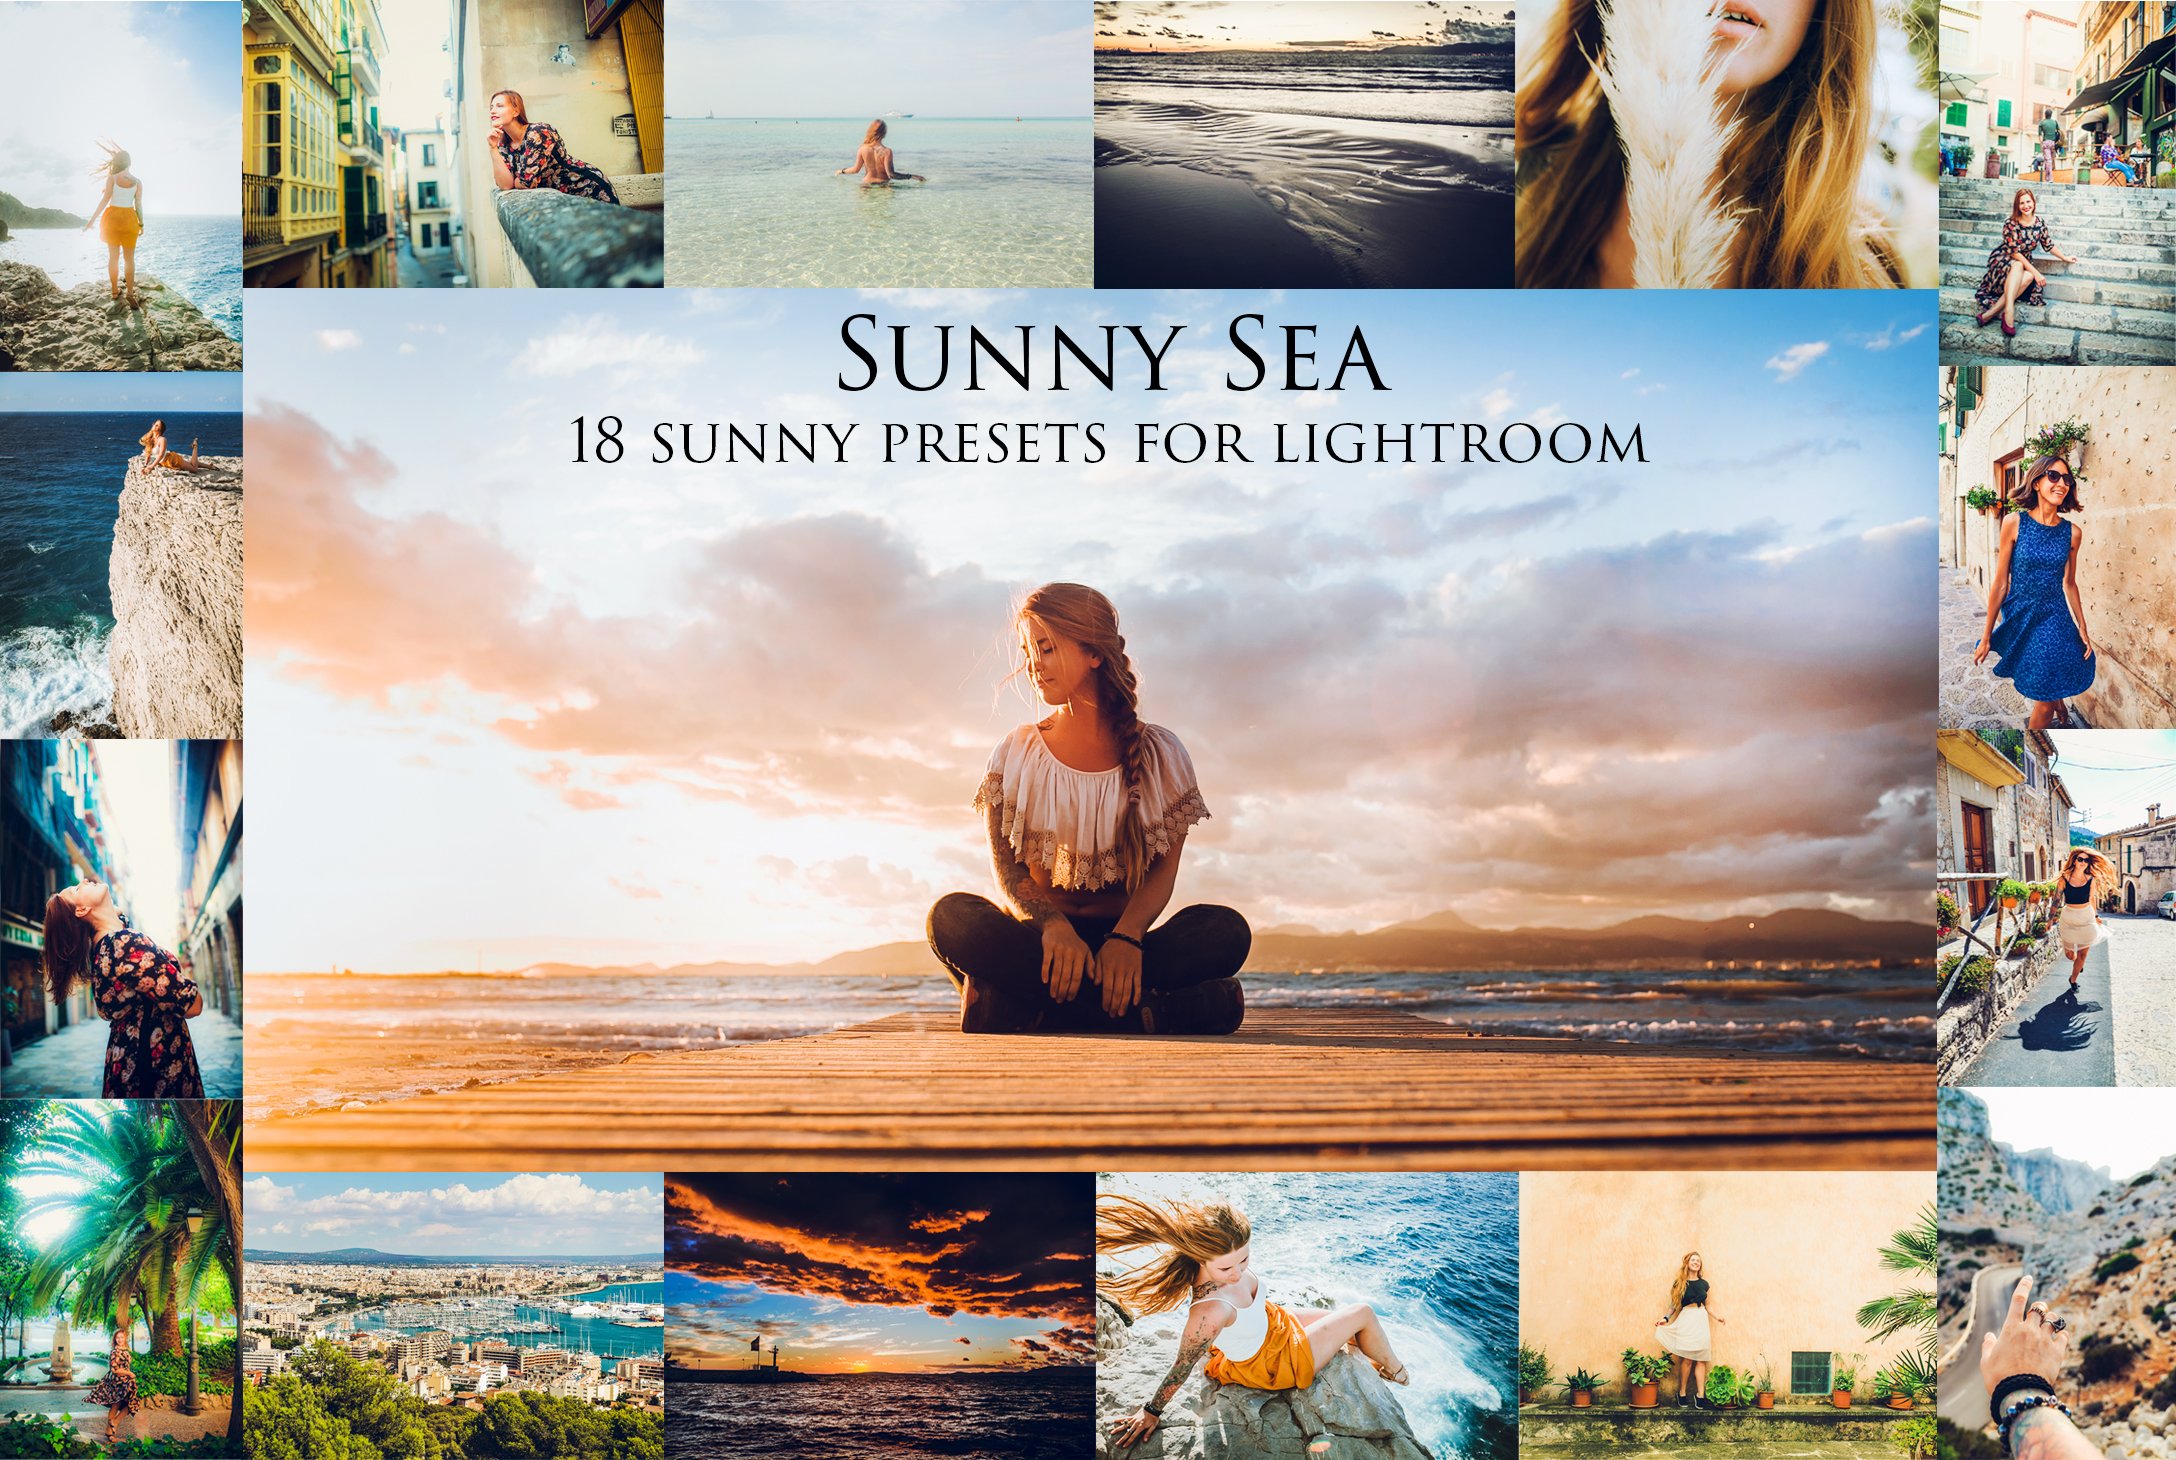 Sunny Sea-18 presets Lr lifestylecover image.